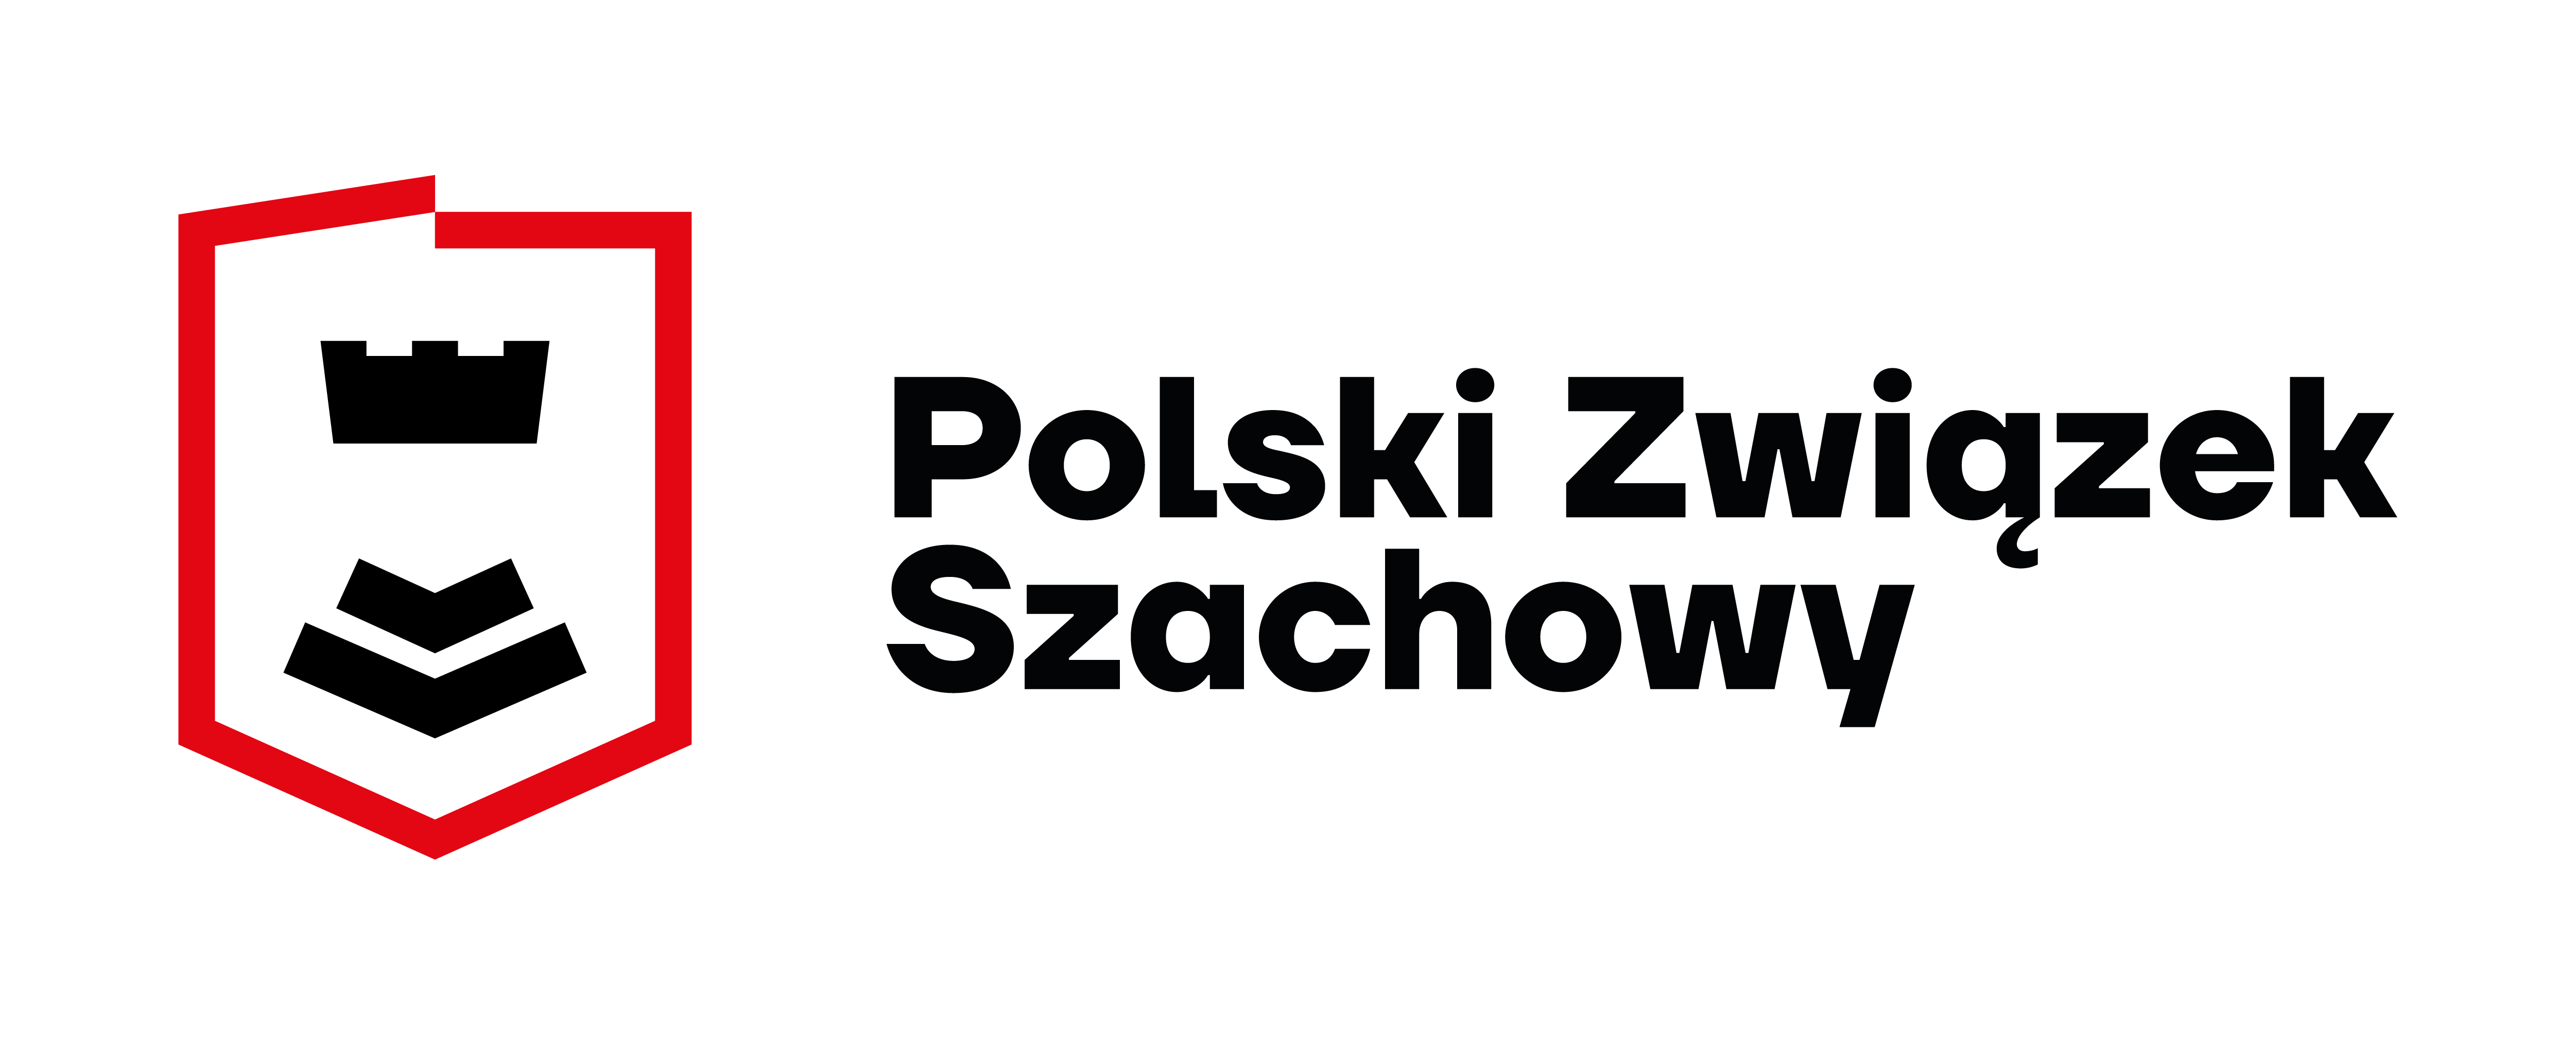 Polish Chess Federation